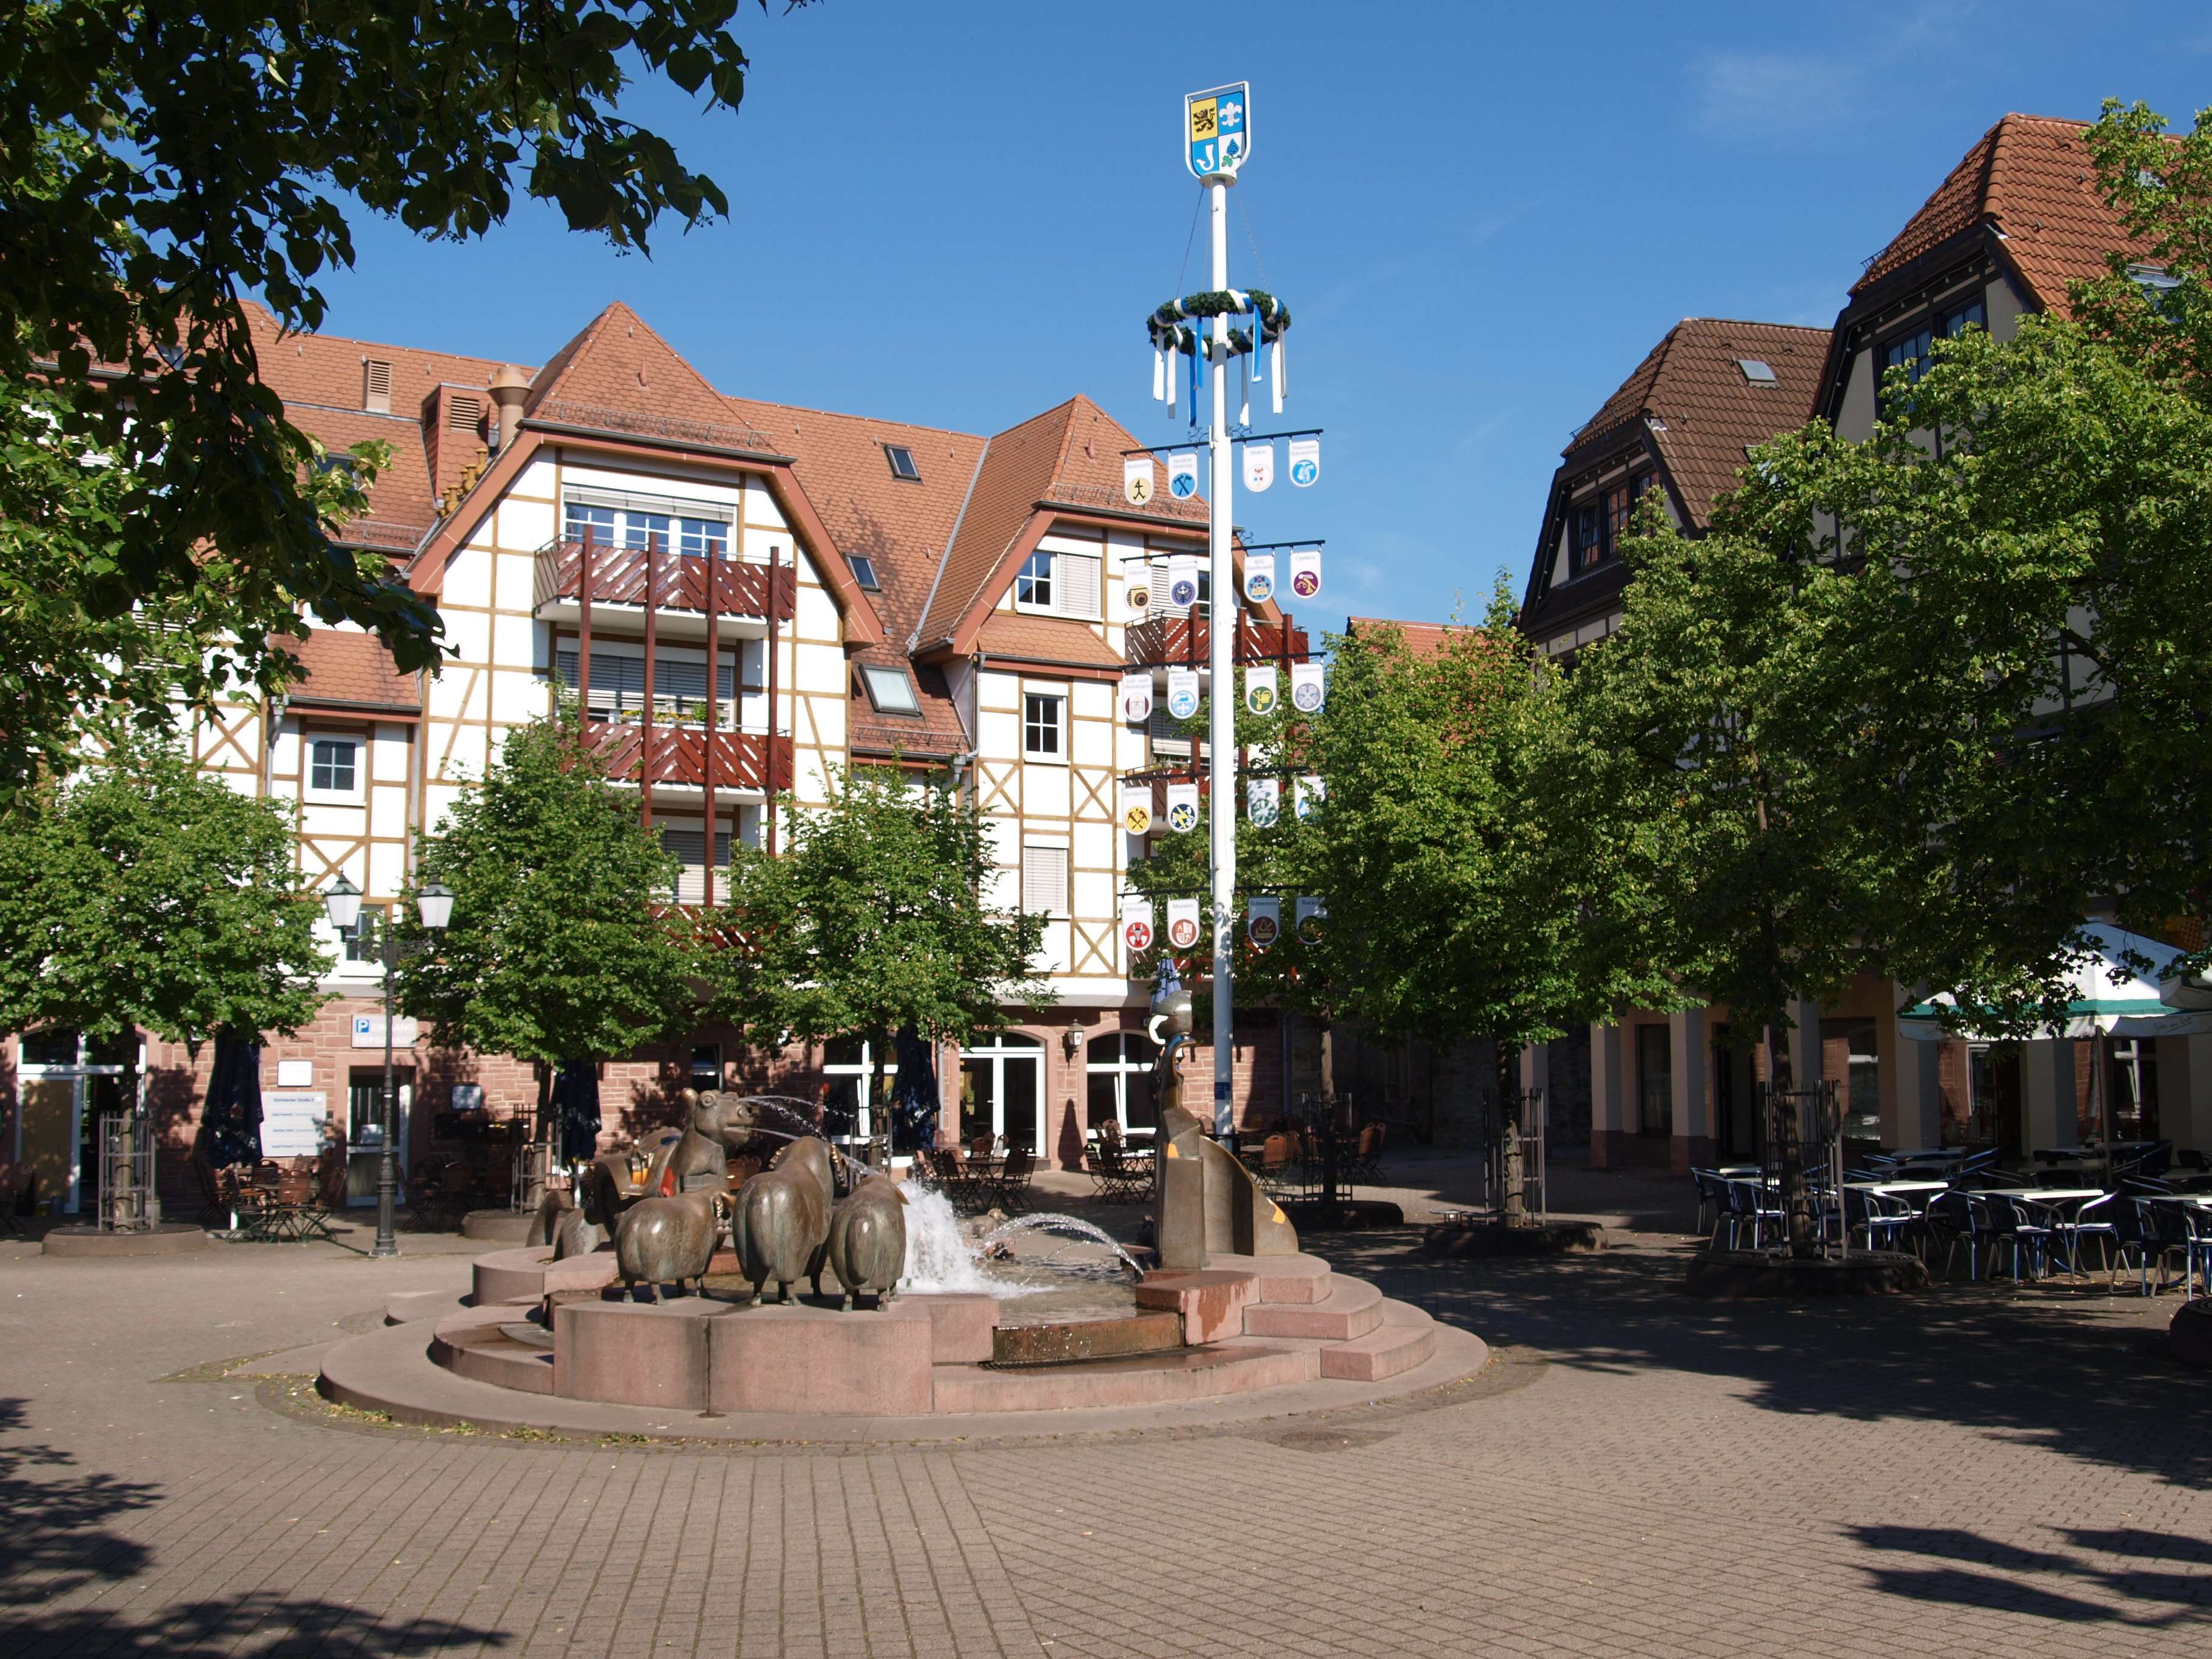  Der Georgi-Marktplatz in Leimen-Mitte 